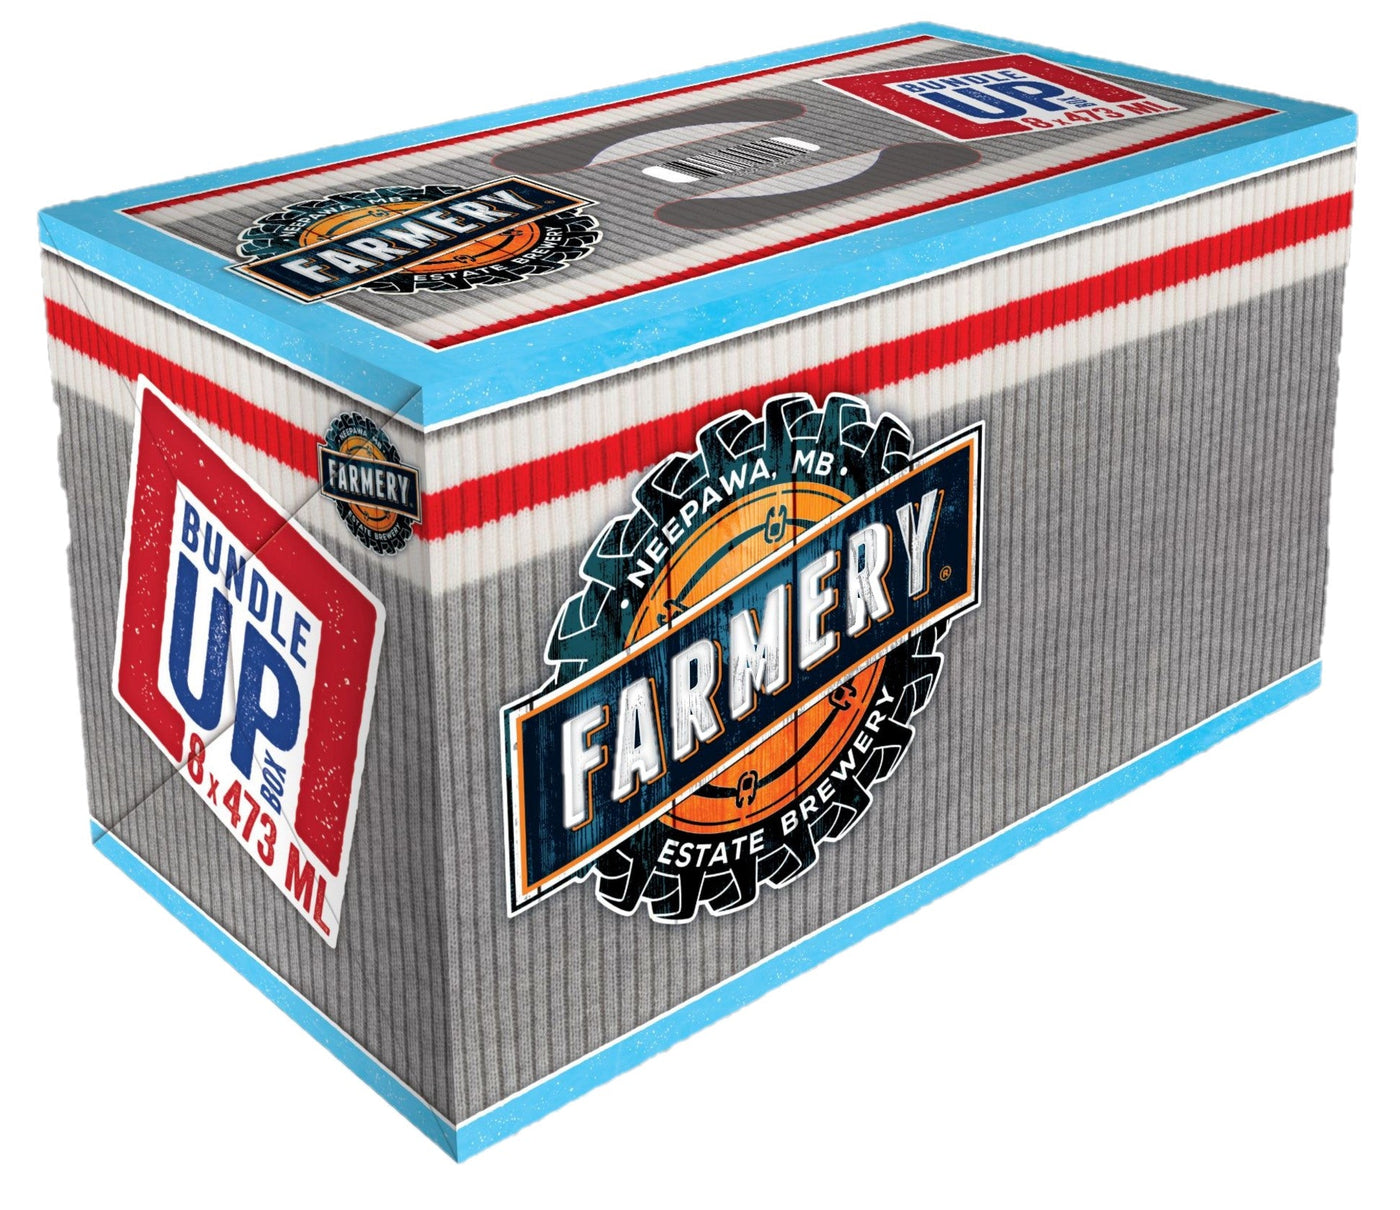 Bundle Up Pack - 8 x 473ml - Farmery Estate Brewing Company Inc.-8pk